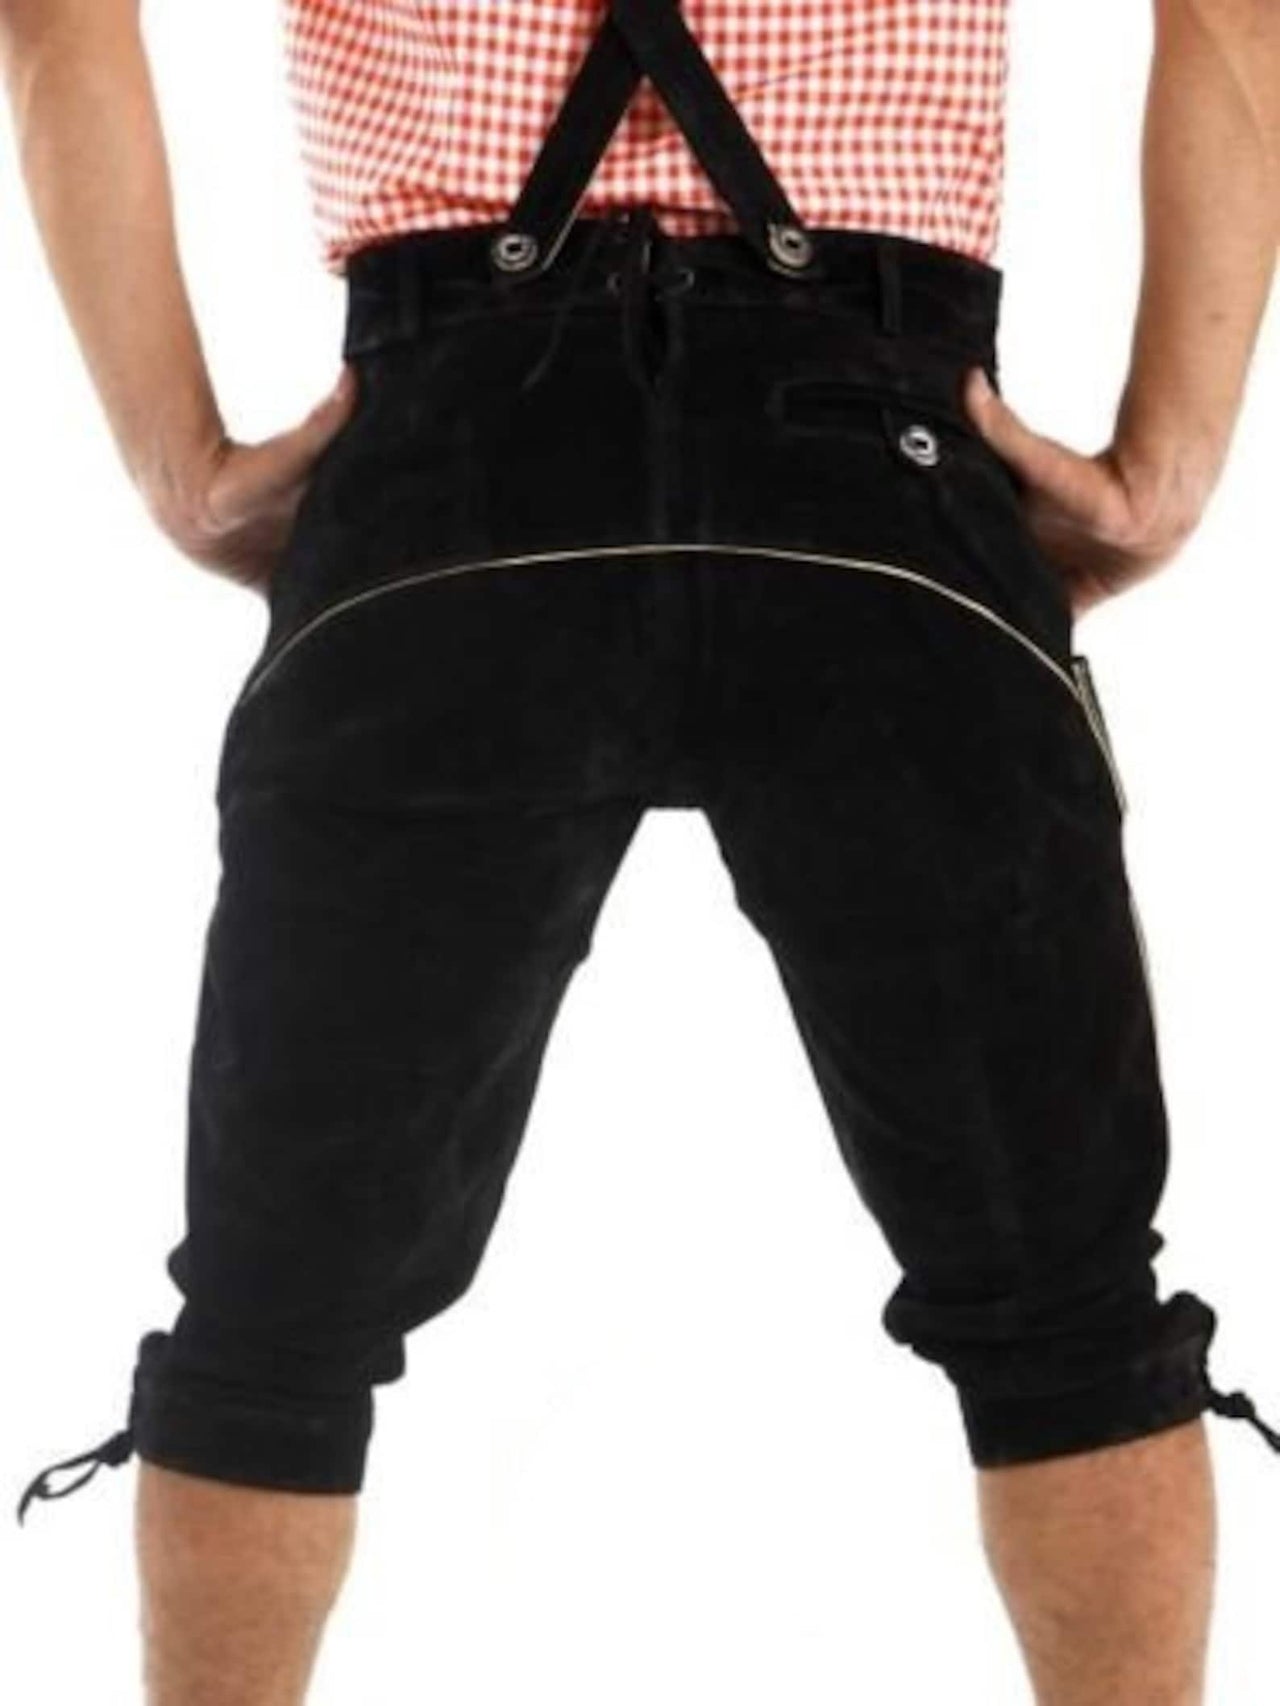 Mens Bavarian Lederhosen Black Austria Oktorbest Lederhosen with Suspender Outfits, Bavarian shorts German Bavarian Outfit for Festival